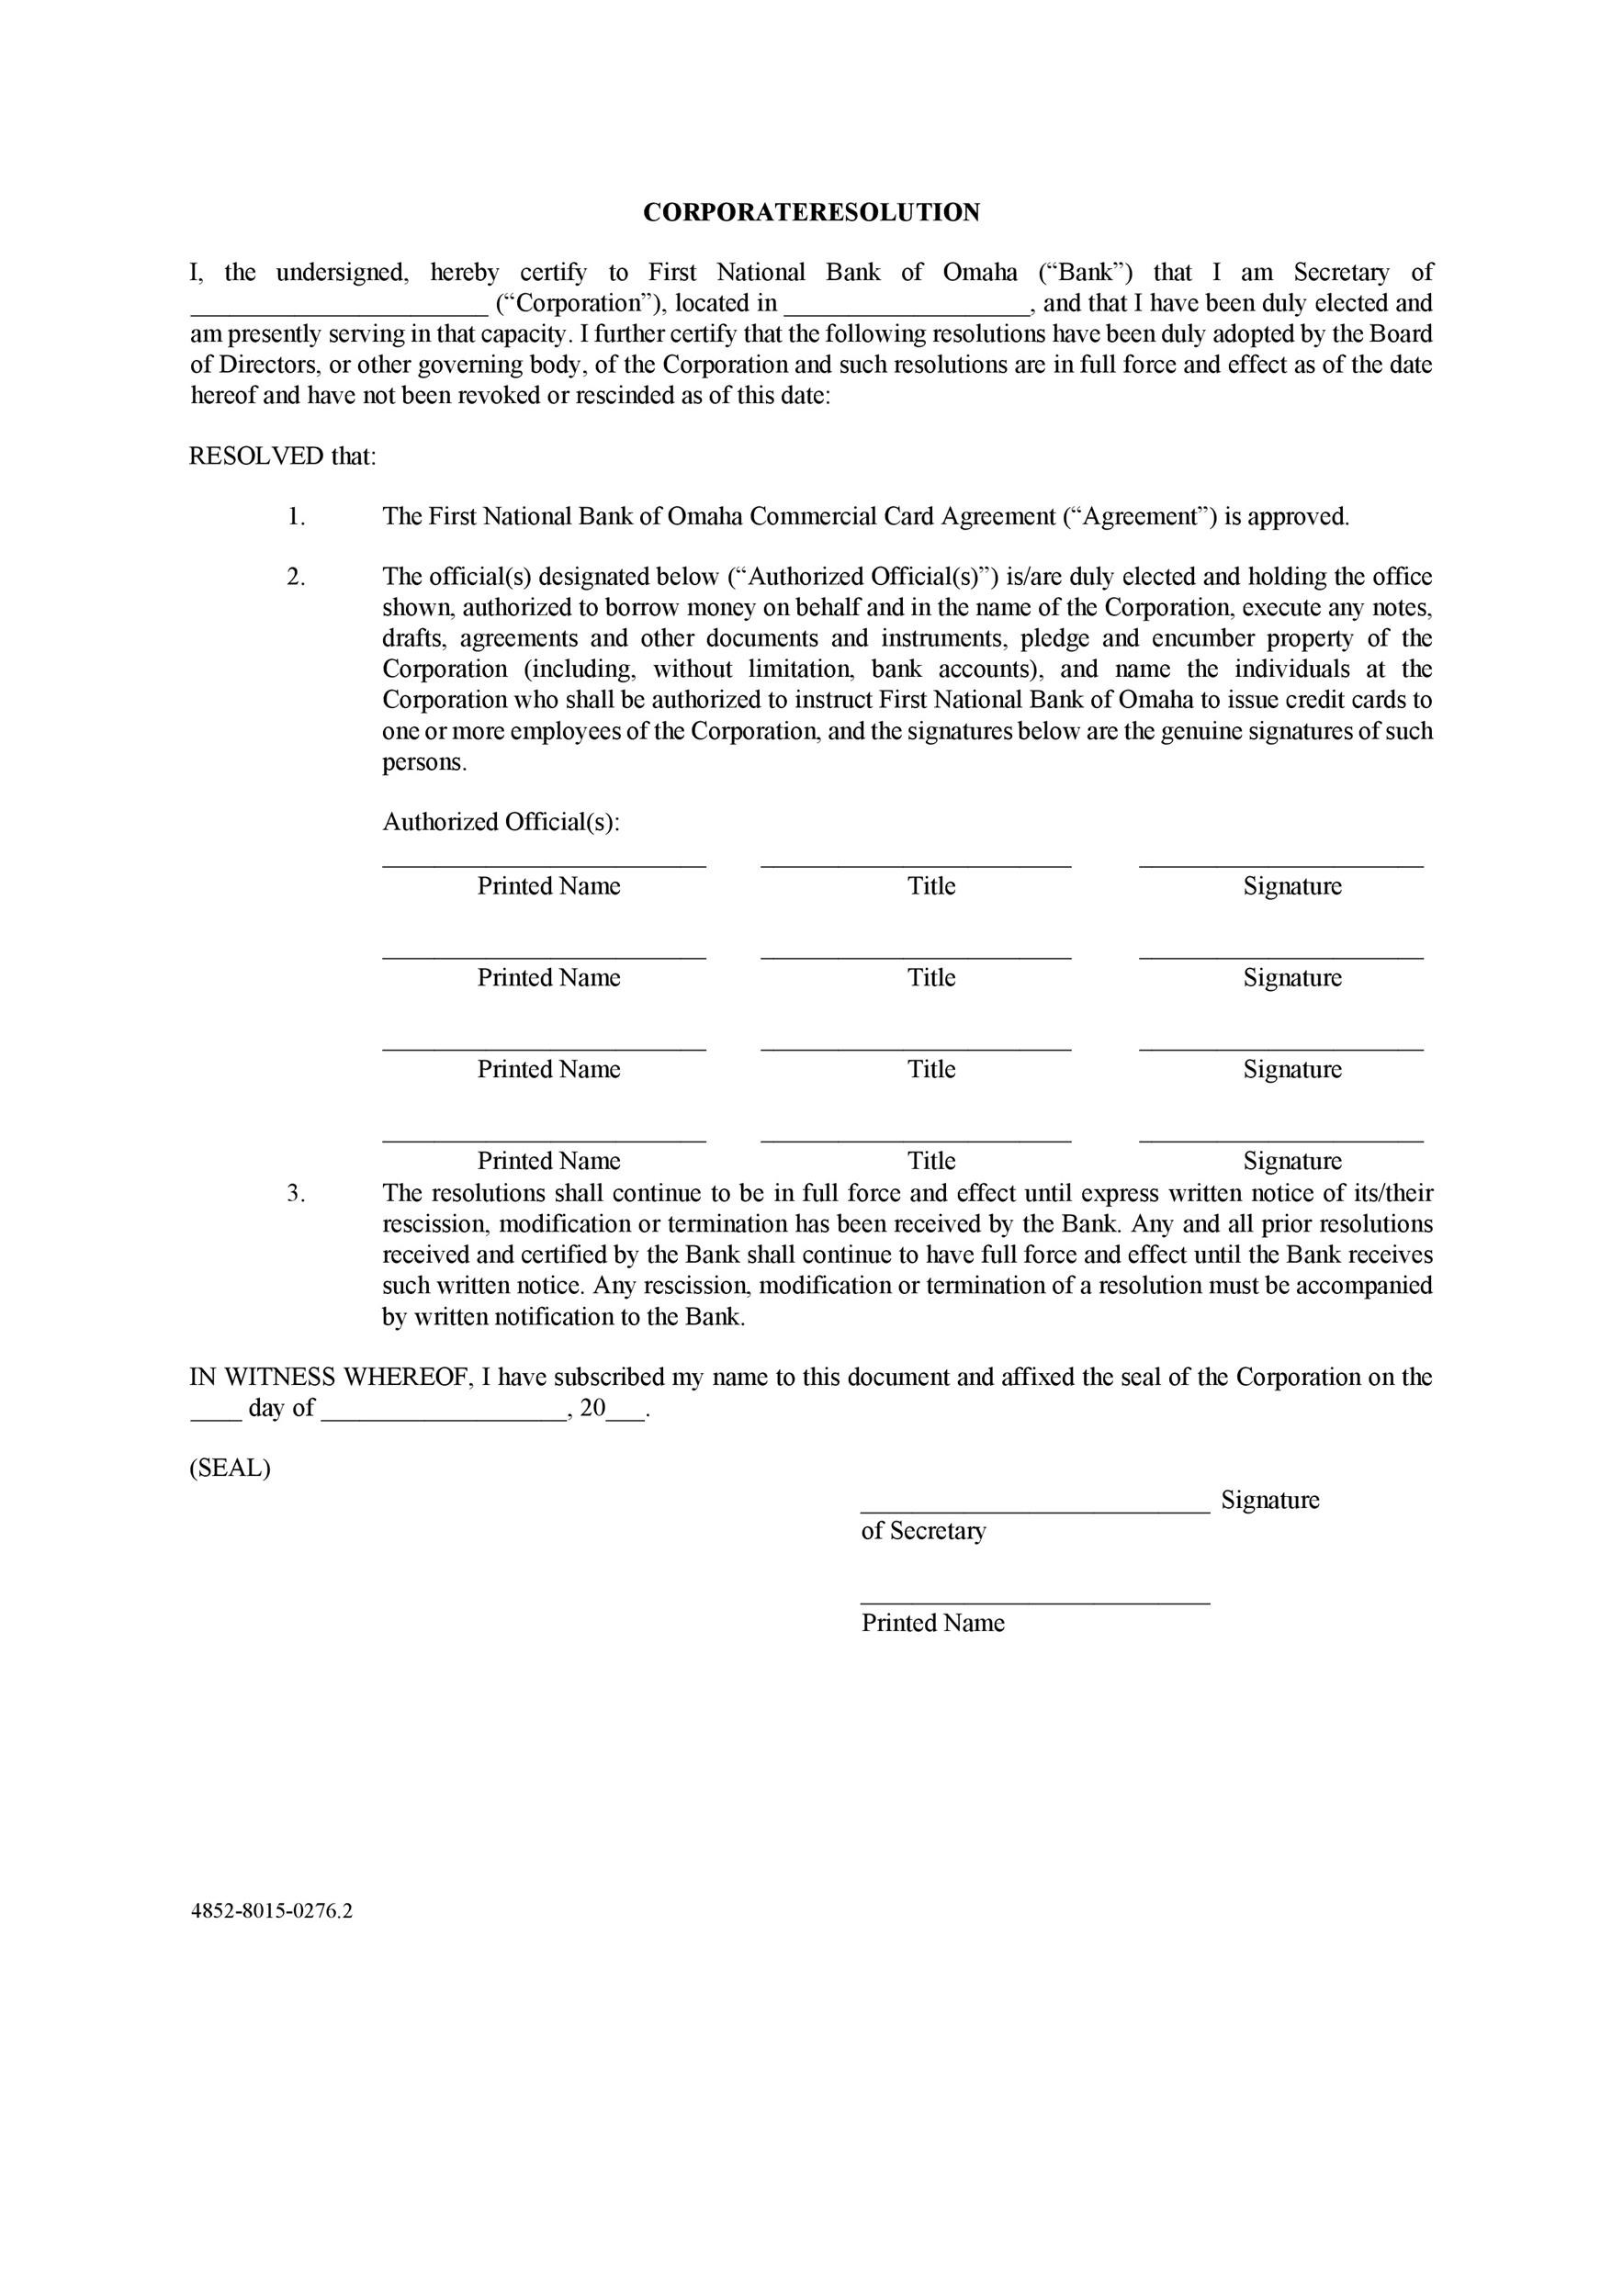 37 Printable Corporate Resolution Forms ᐅ TemplateLab